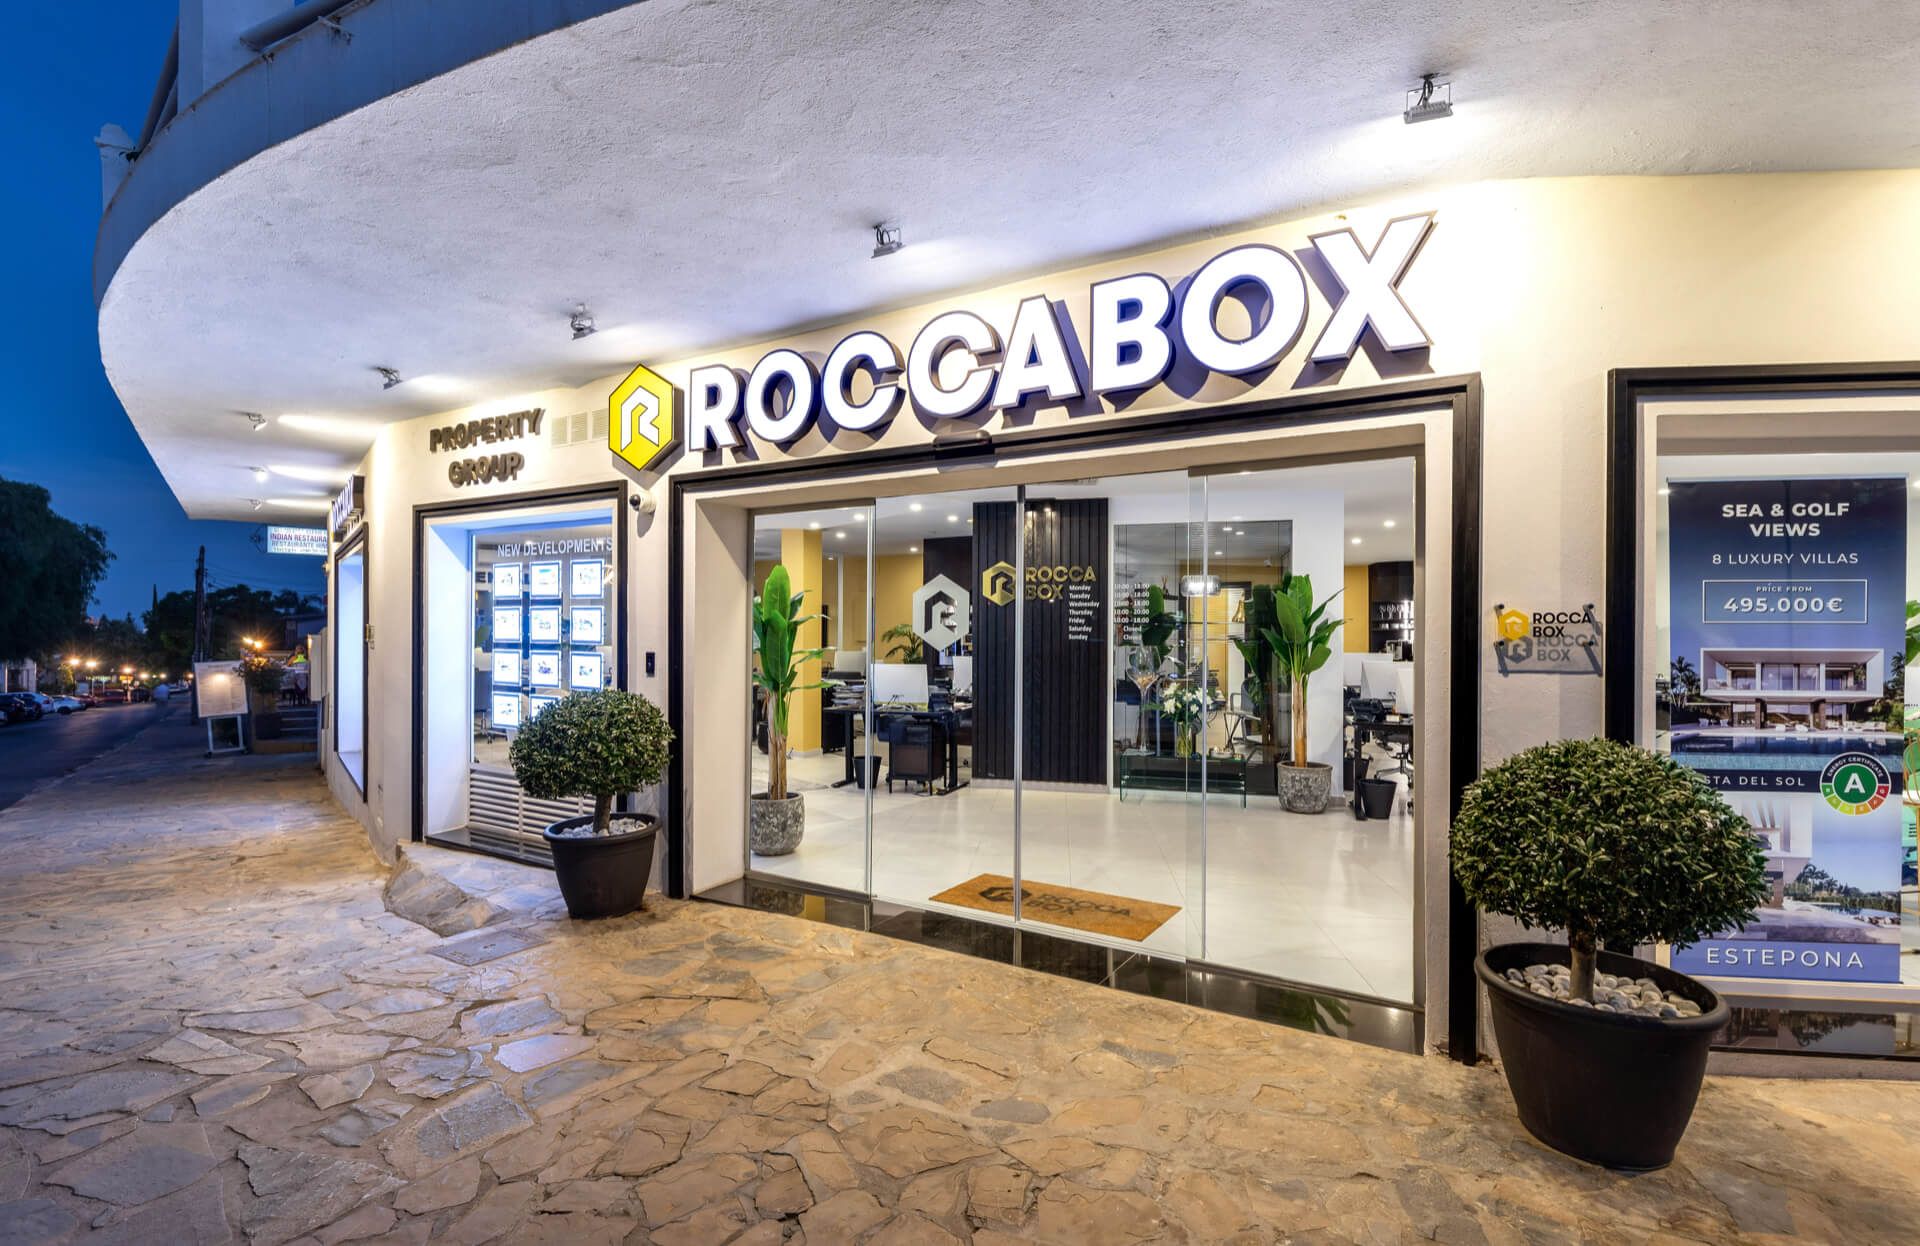 Puerto Banus  Roccabox Marbella Real Estate